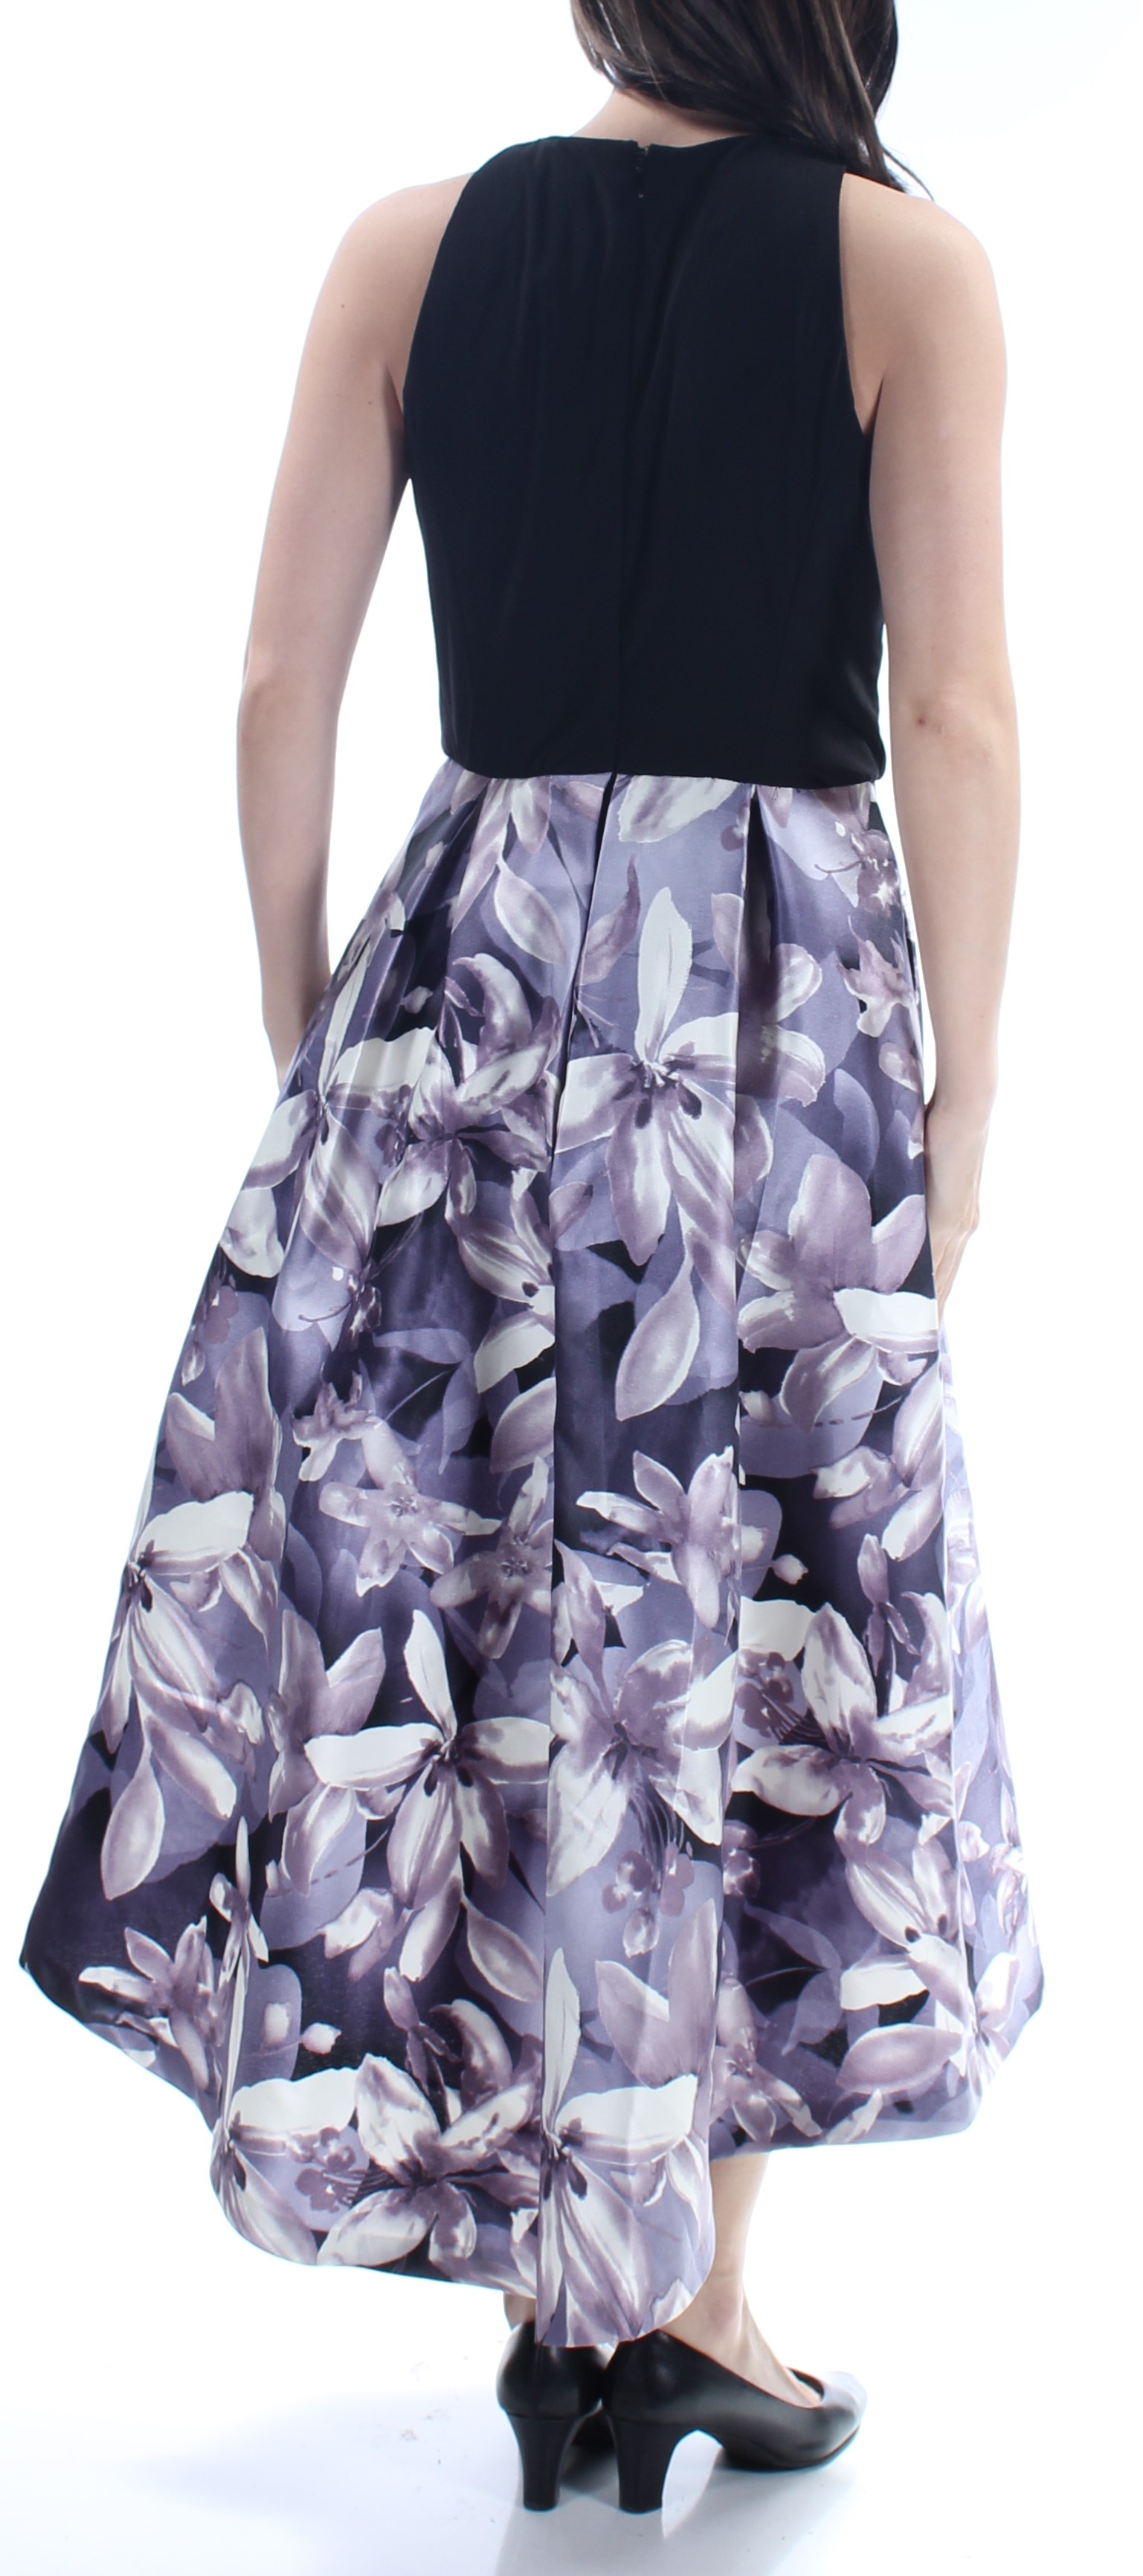 SLNY $119 Womens New 1432 Purple Floral Tea-Length Fit + Flare Dress 10 B+B - image 2 of 2